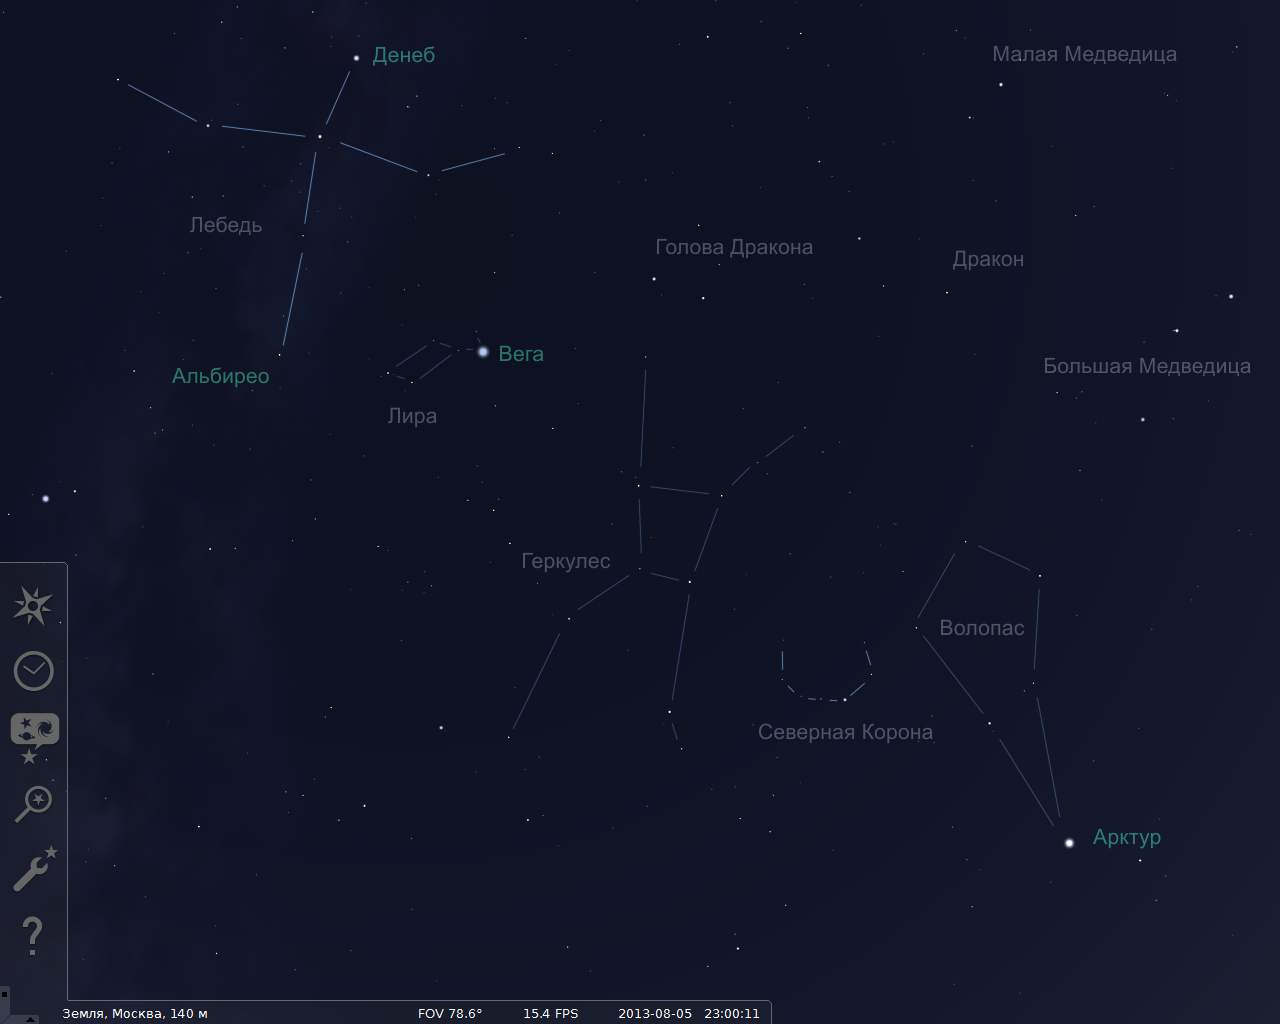 Созвездие августа. Созвездие Северная корона на карте звездного неба. Созвездия на небе в августе. Созвездие дракона фото на небе. Денеб звезда в созвездии.